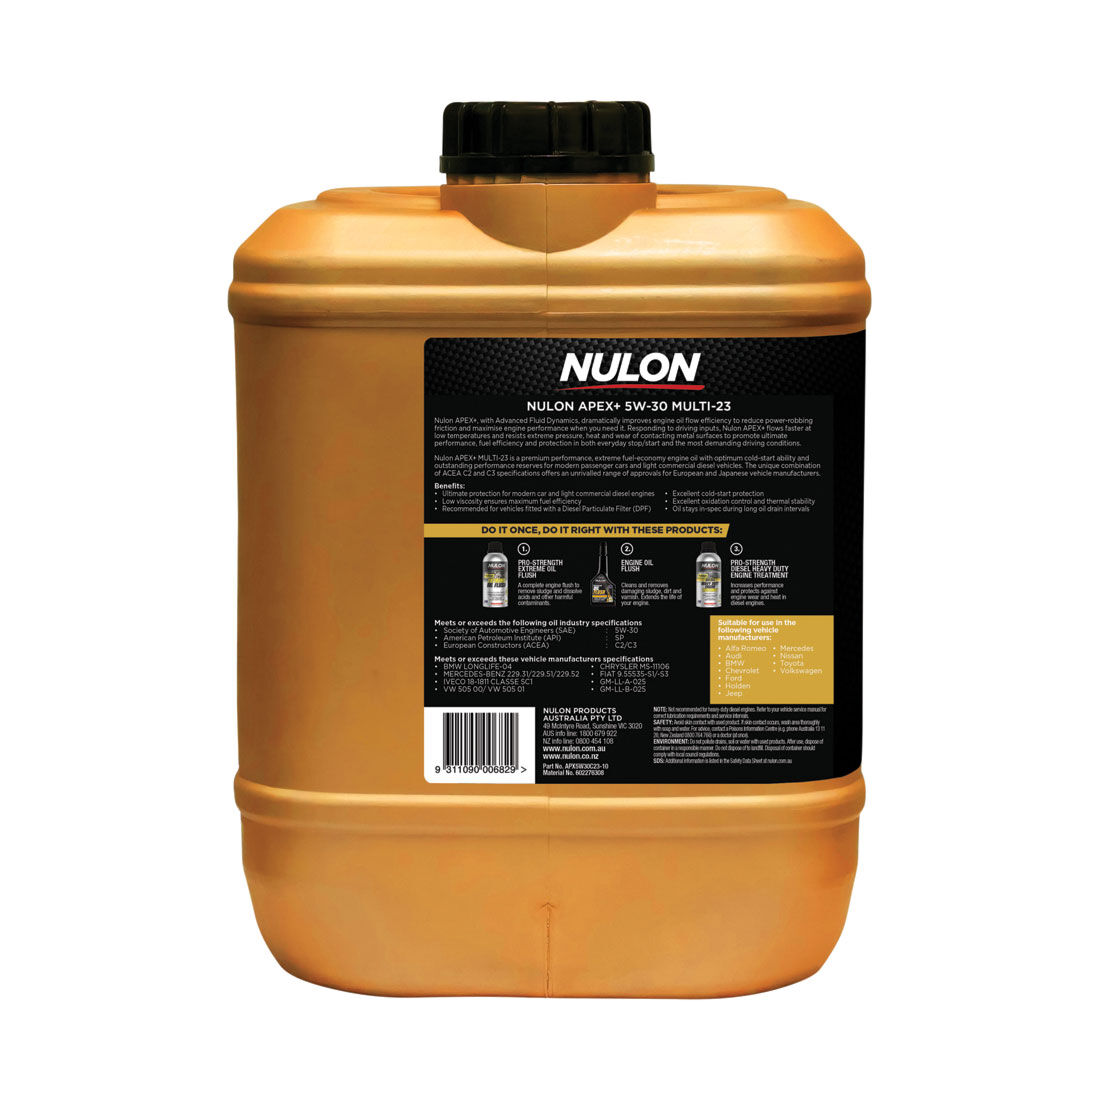 Nulon Full Synthetic Apex+ Multi 23 Engine Oil 5W-30 10 Litre, , scaau_hi-res